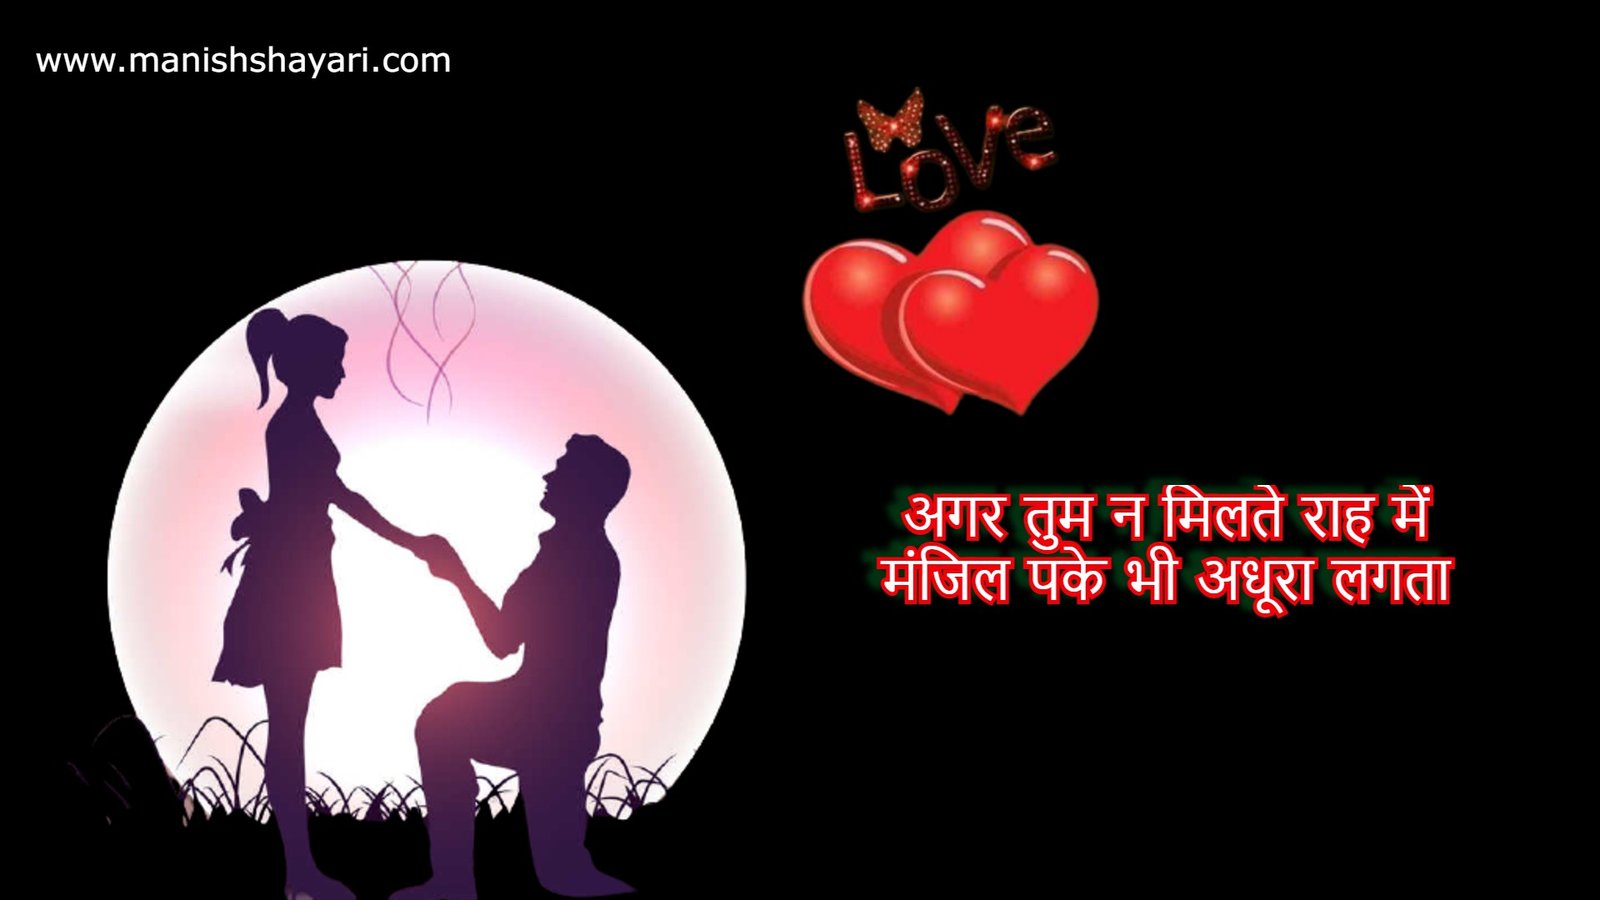 Valentine's Day Special Shayari